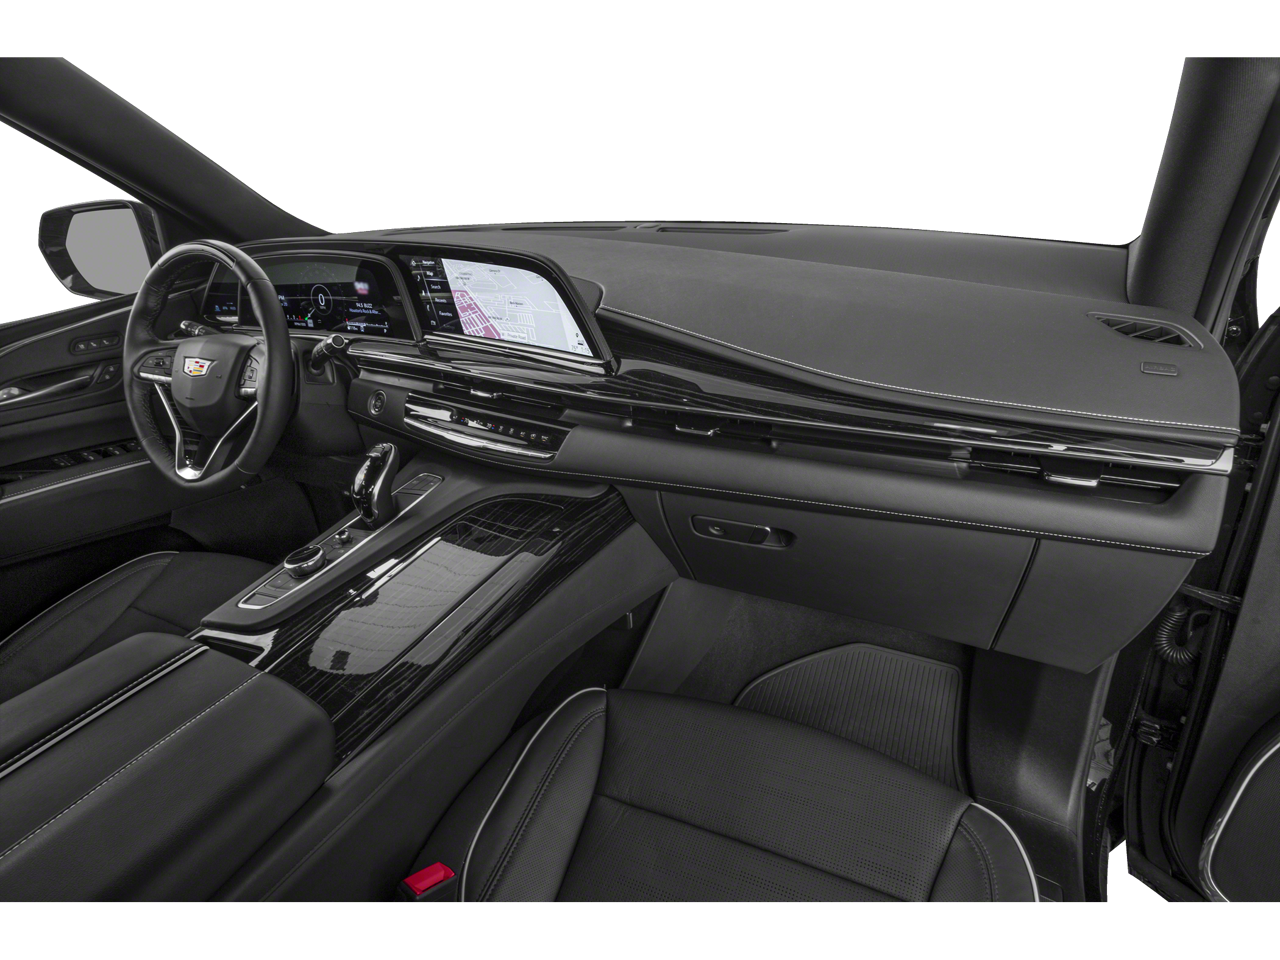 2021 Cadillac Escalade ESV Sport Platinum NEW ARRIVAL!!!